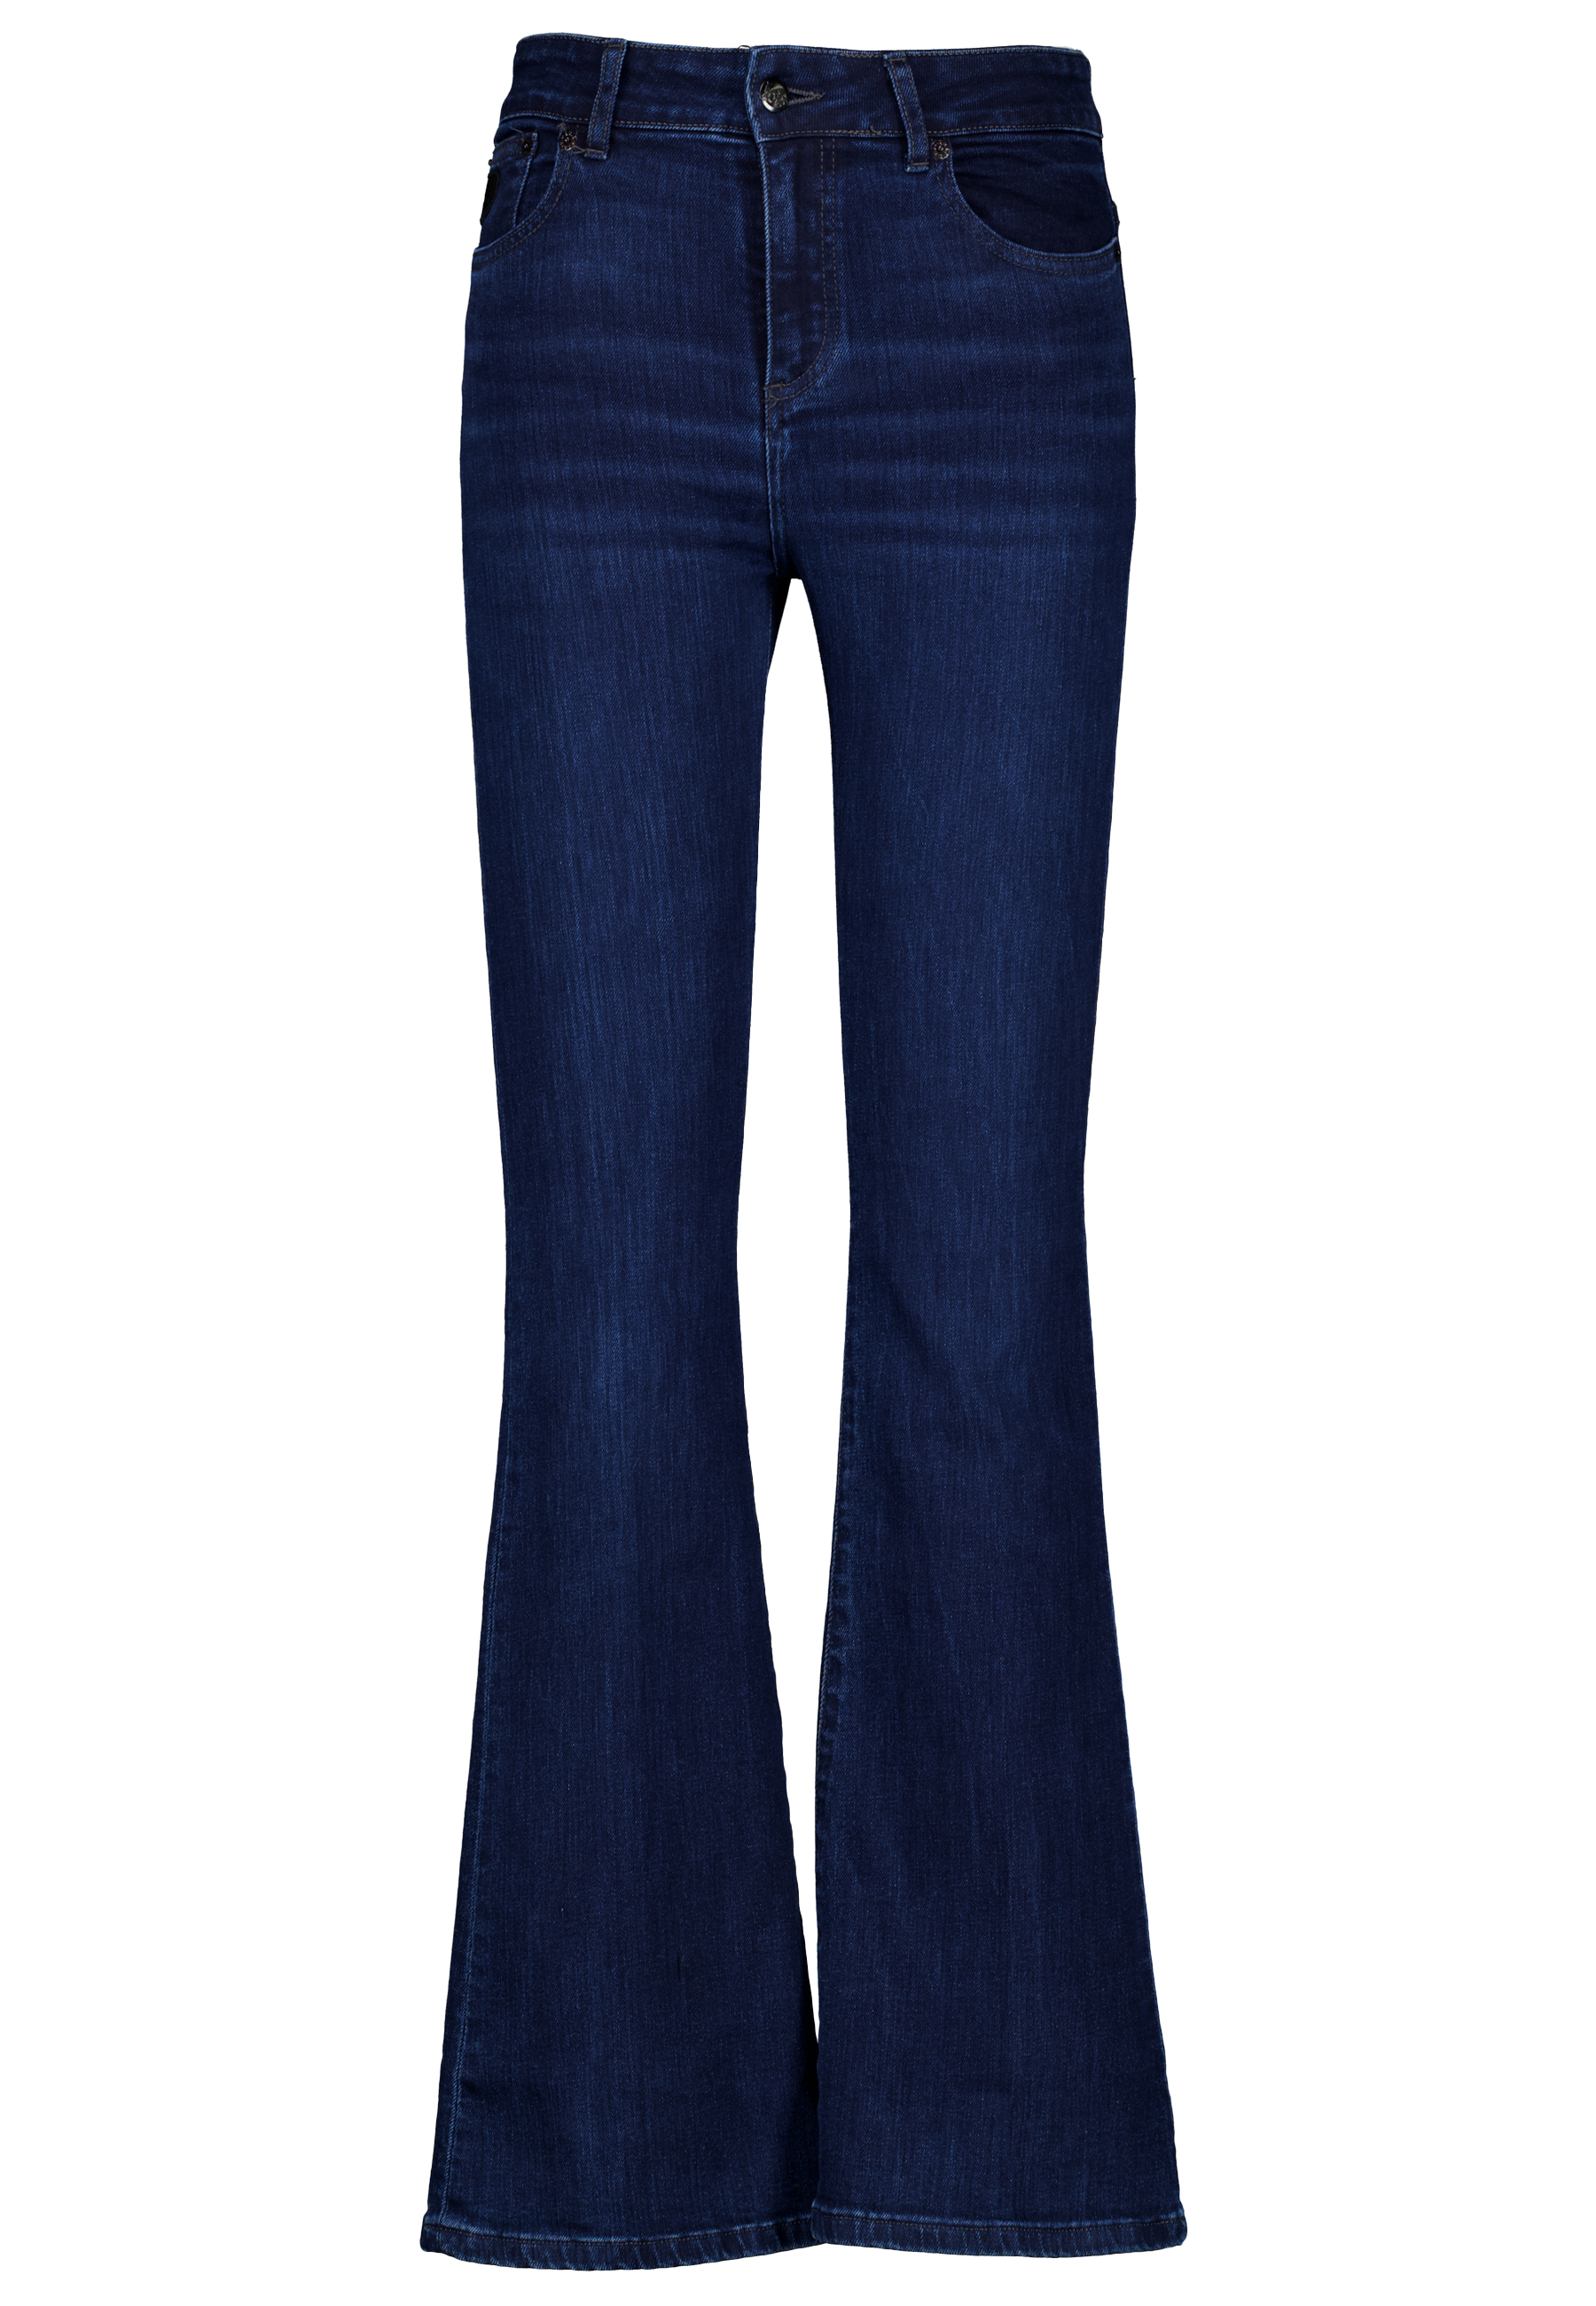 Lois jeans blauw Dames maat 28/32